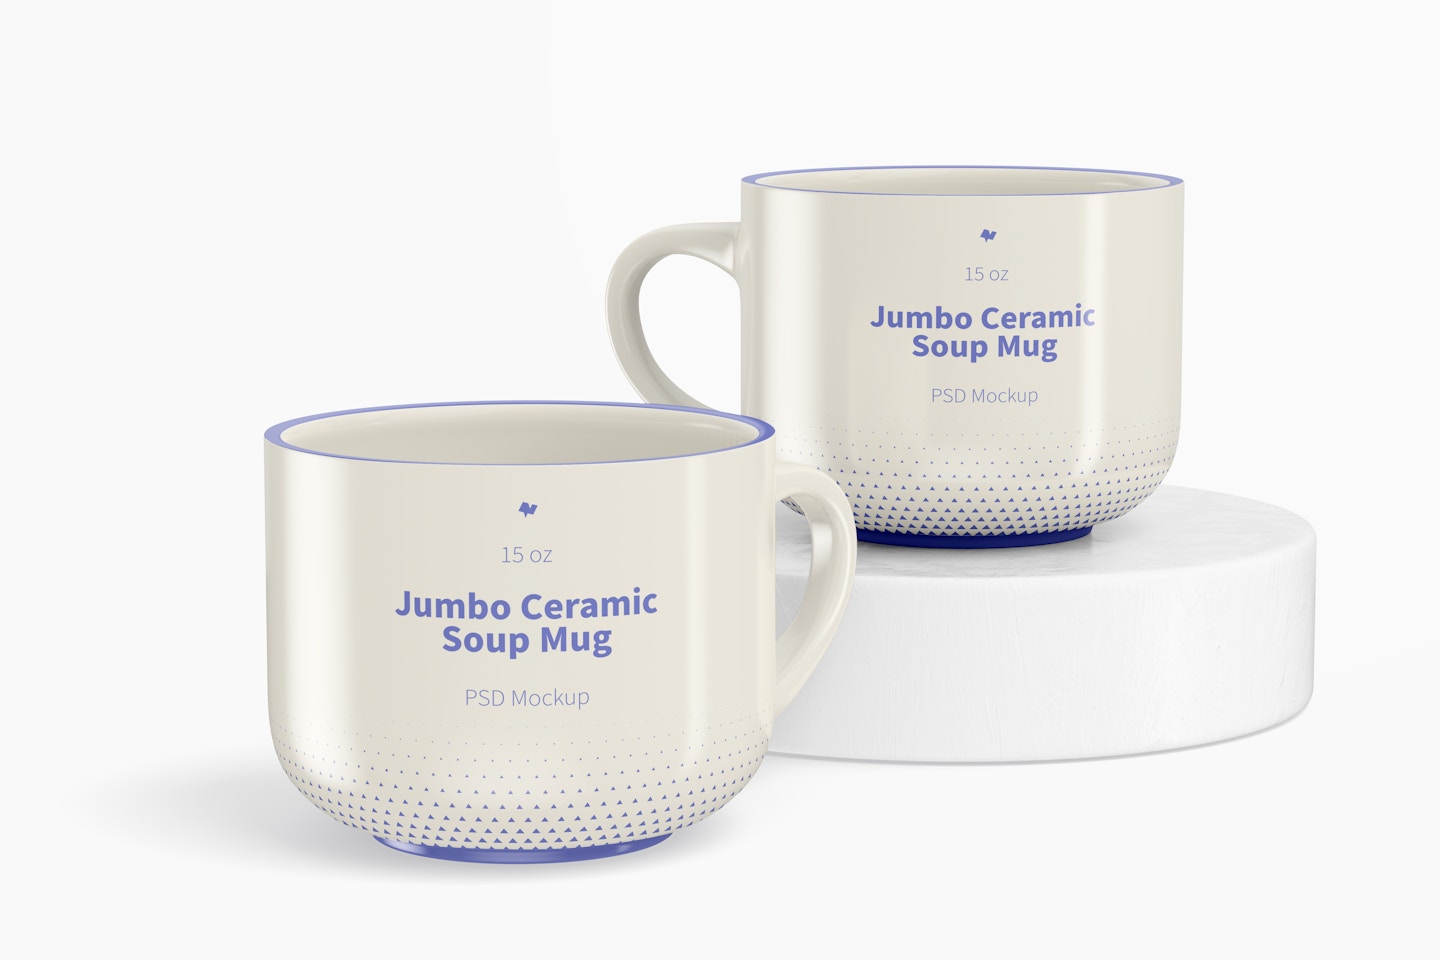 15 oz Jumbo Ceramic Soup Mug Mockup